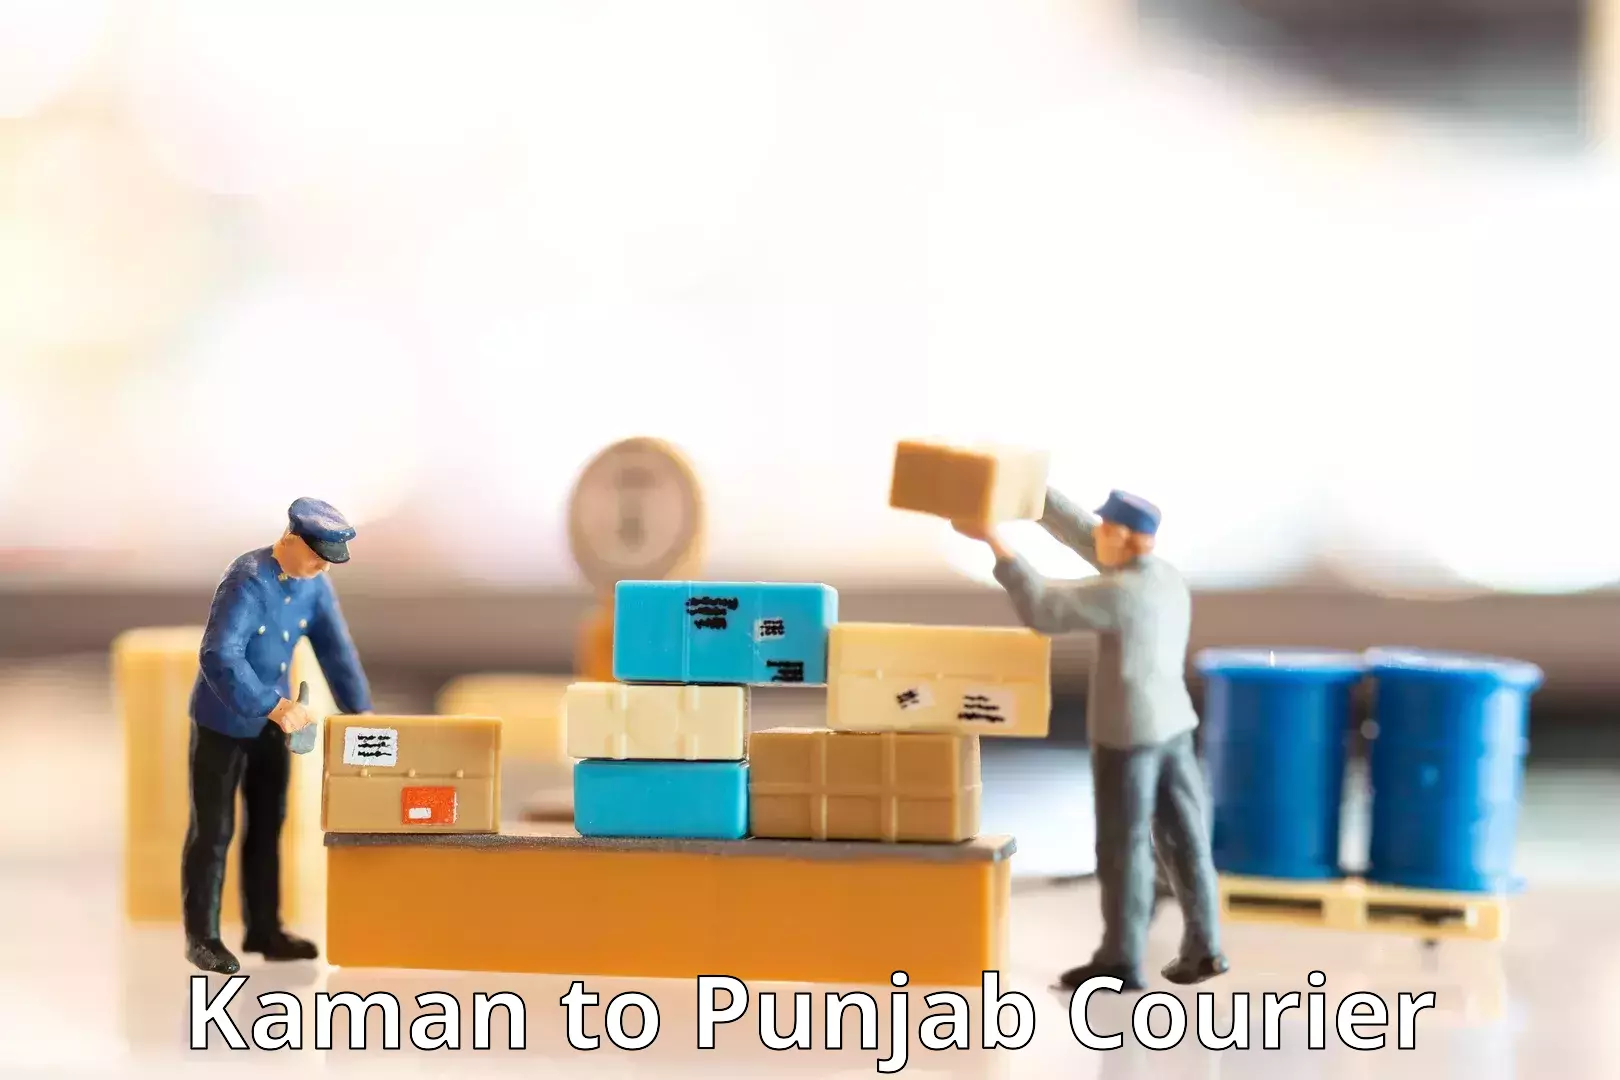 Courier service partnerships Kaman to Central University of Punjab Bathinda